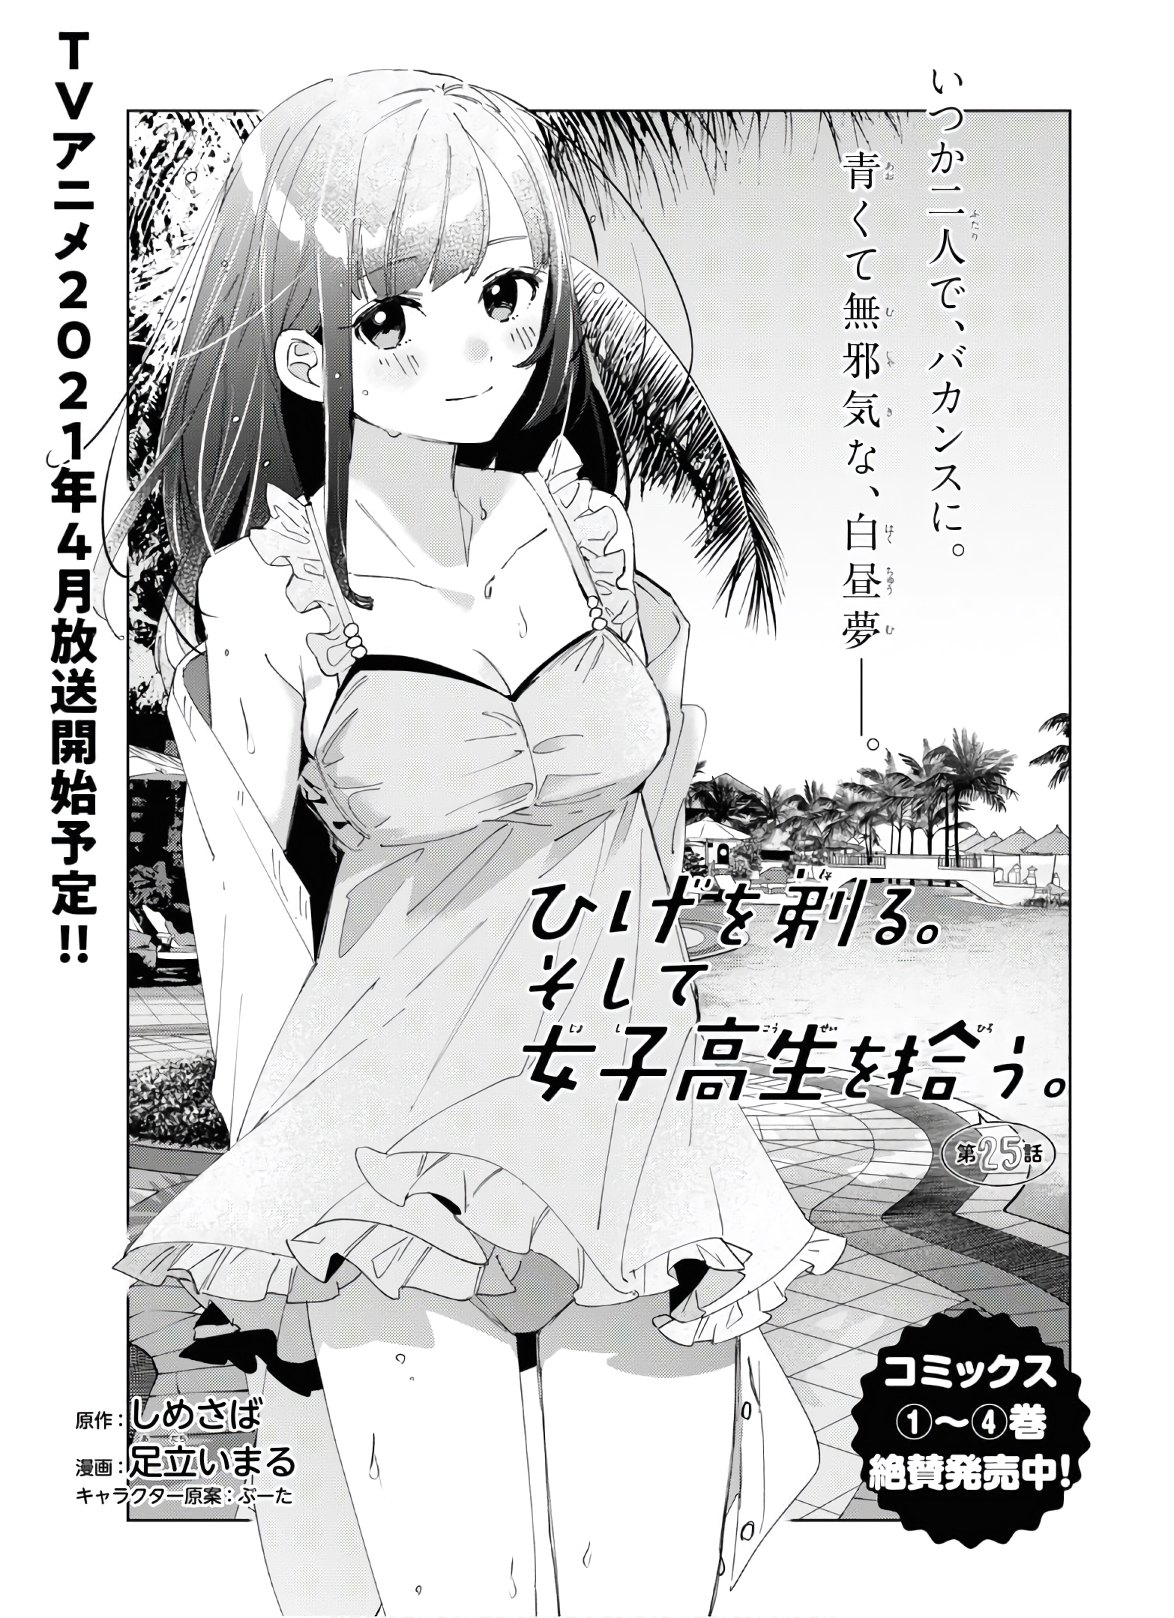 Chapter 25 Manga Higehiro Wiki Fandom